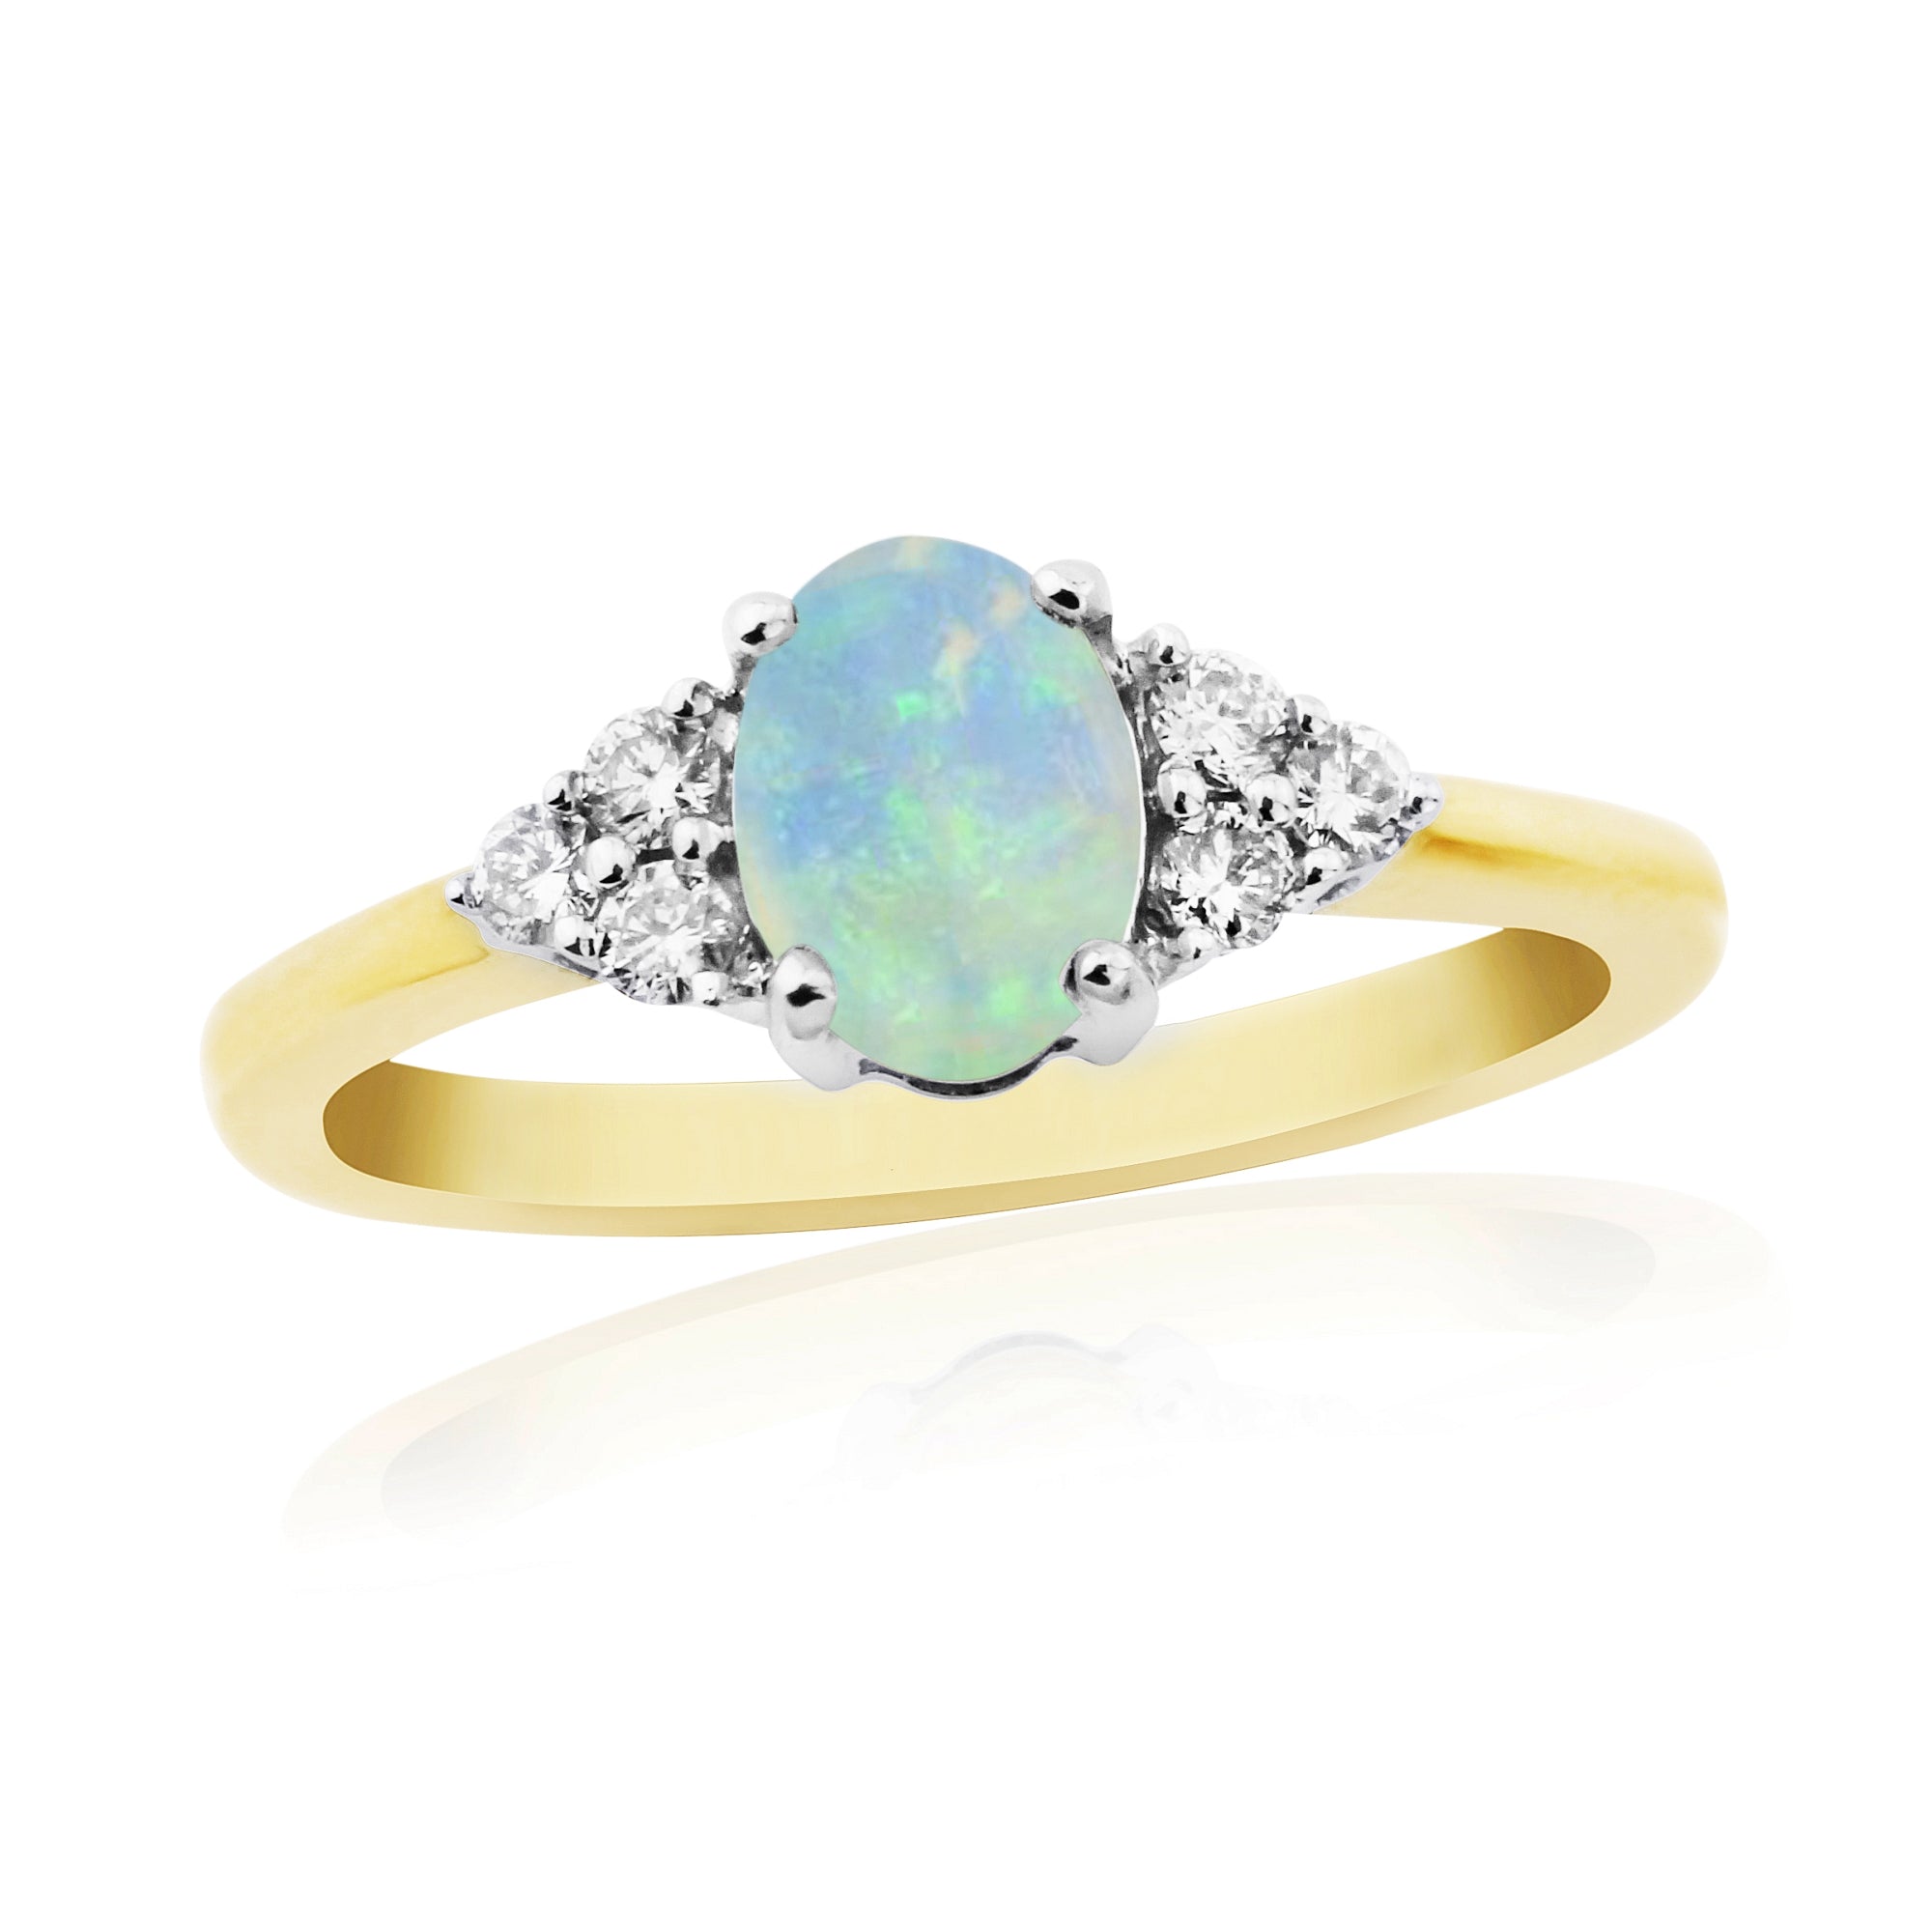 9ct gold 7x5mm oval opal & diamond ring 0.15ct